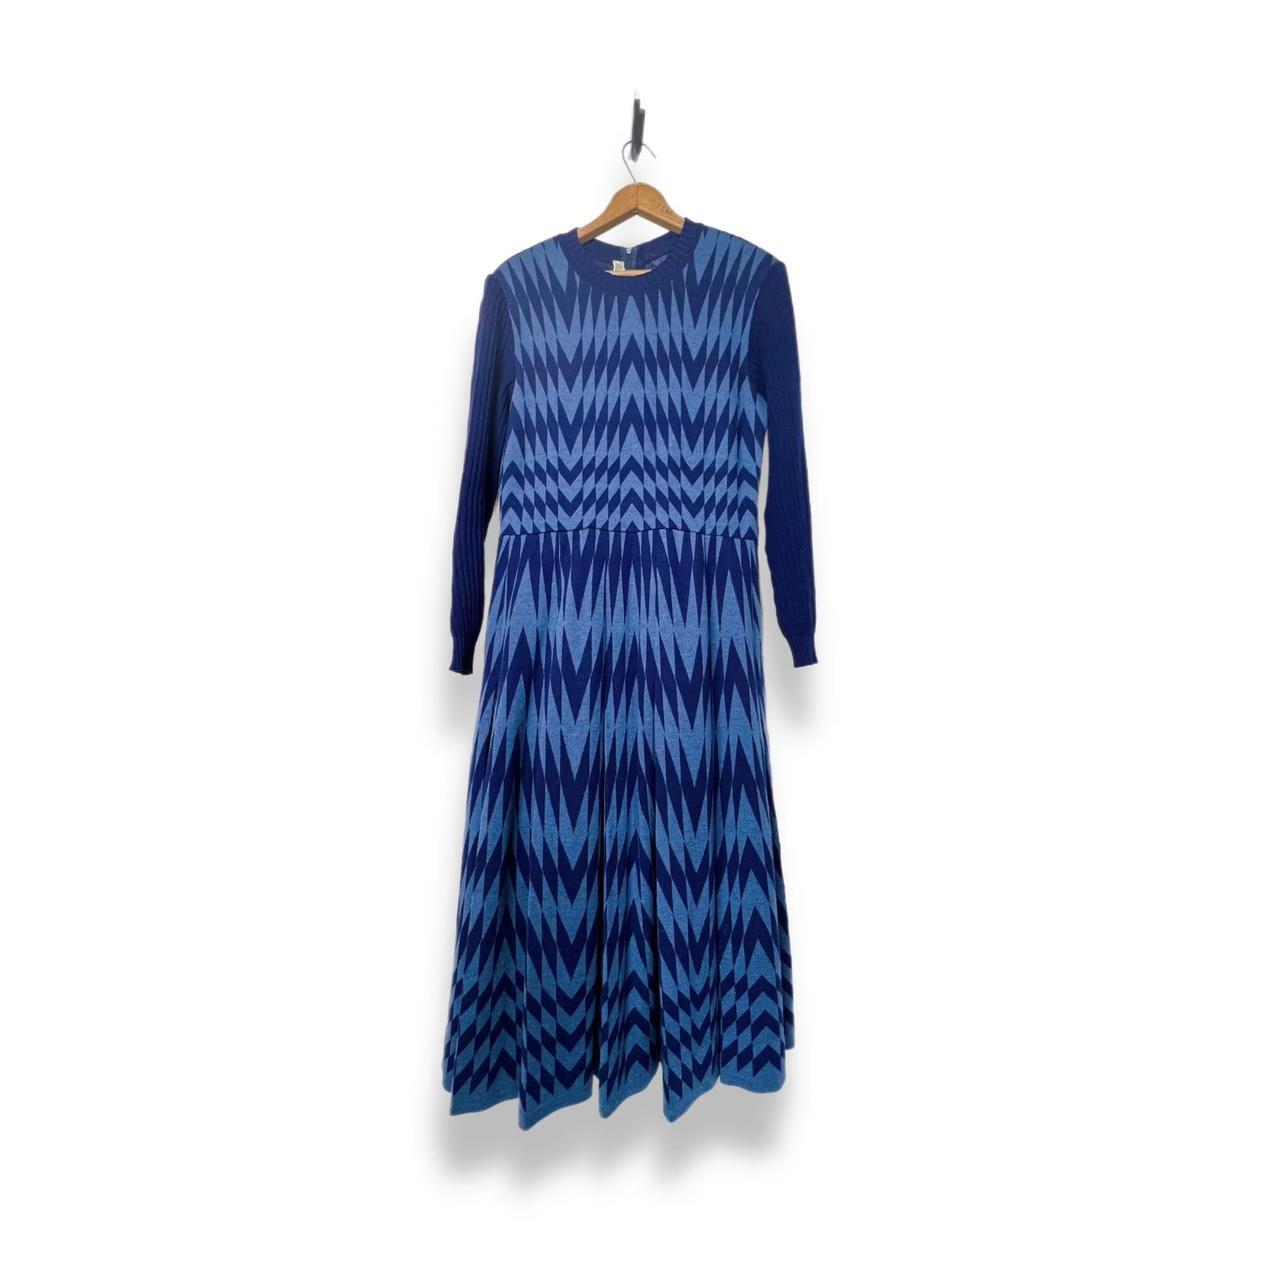 Lanvin Women's Blue and Navy Dress